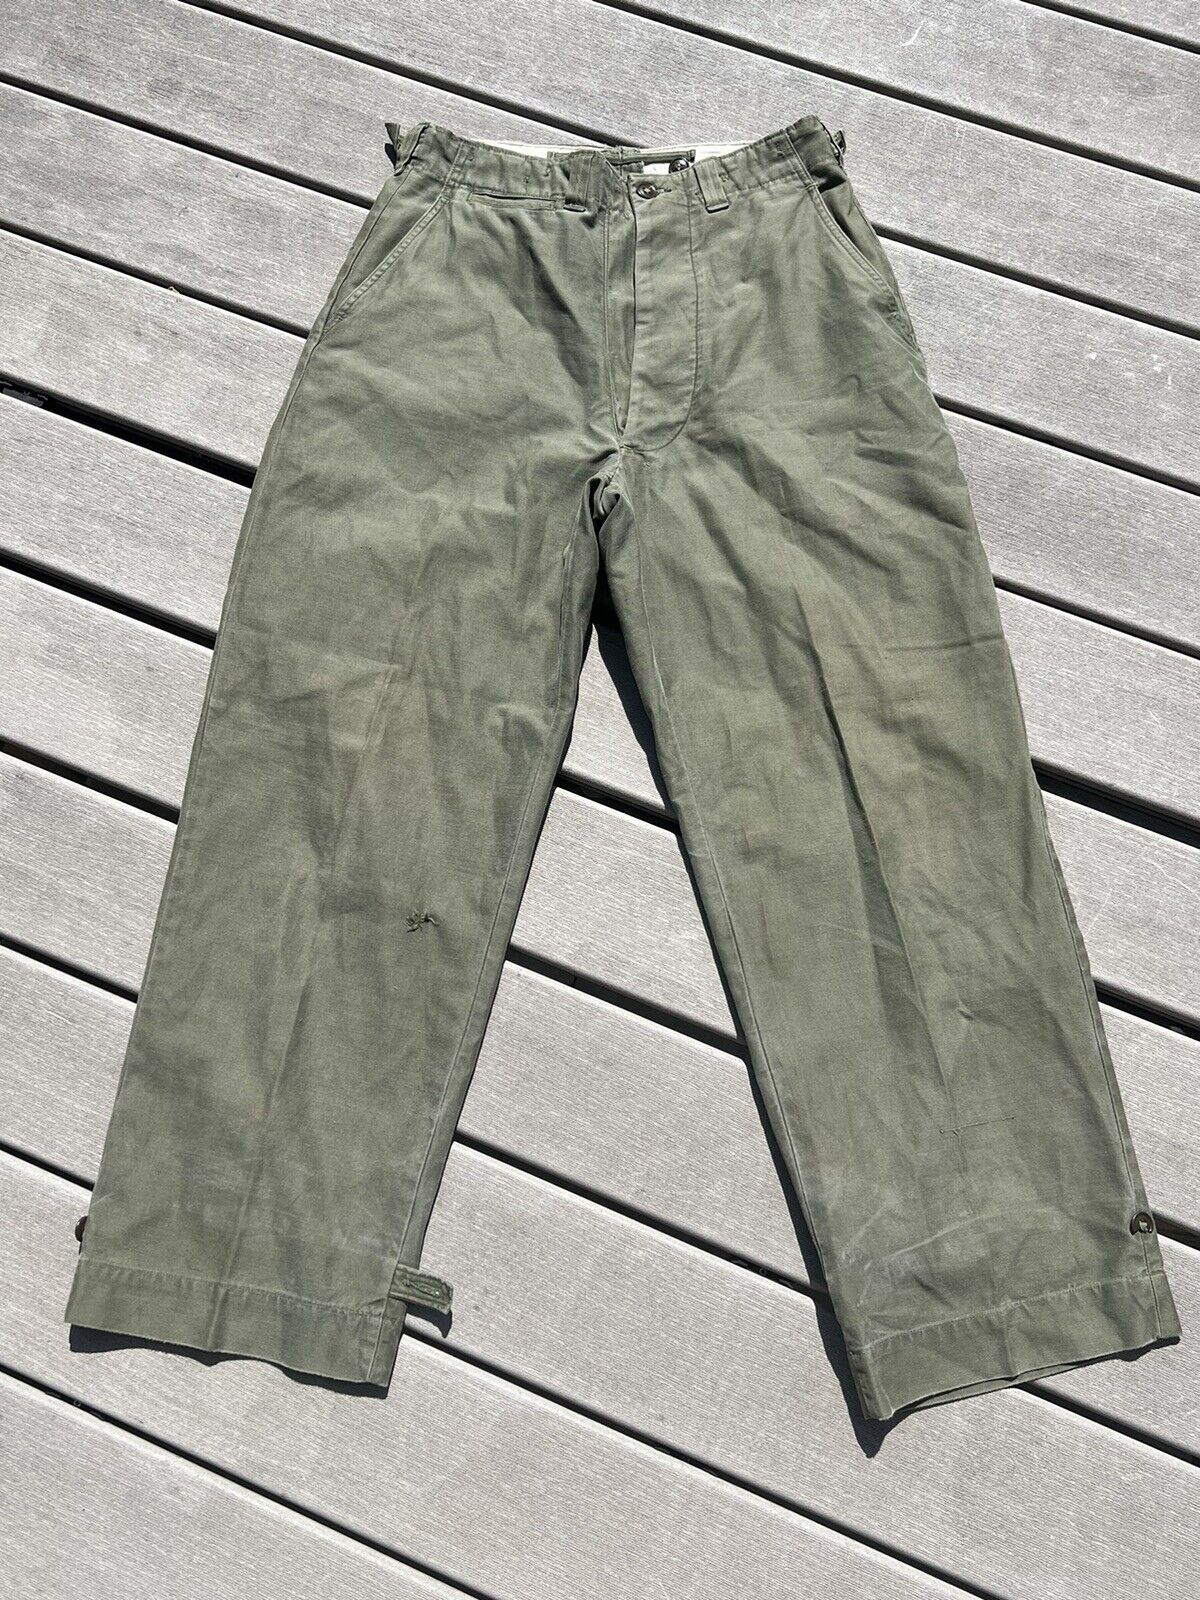 WW2 US Army M1943 Cotton Field Trousers 30x30 Original WWII 1945 Pants